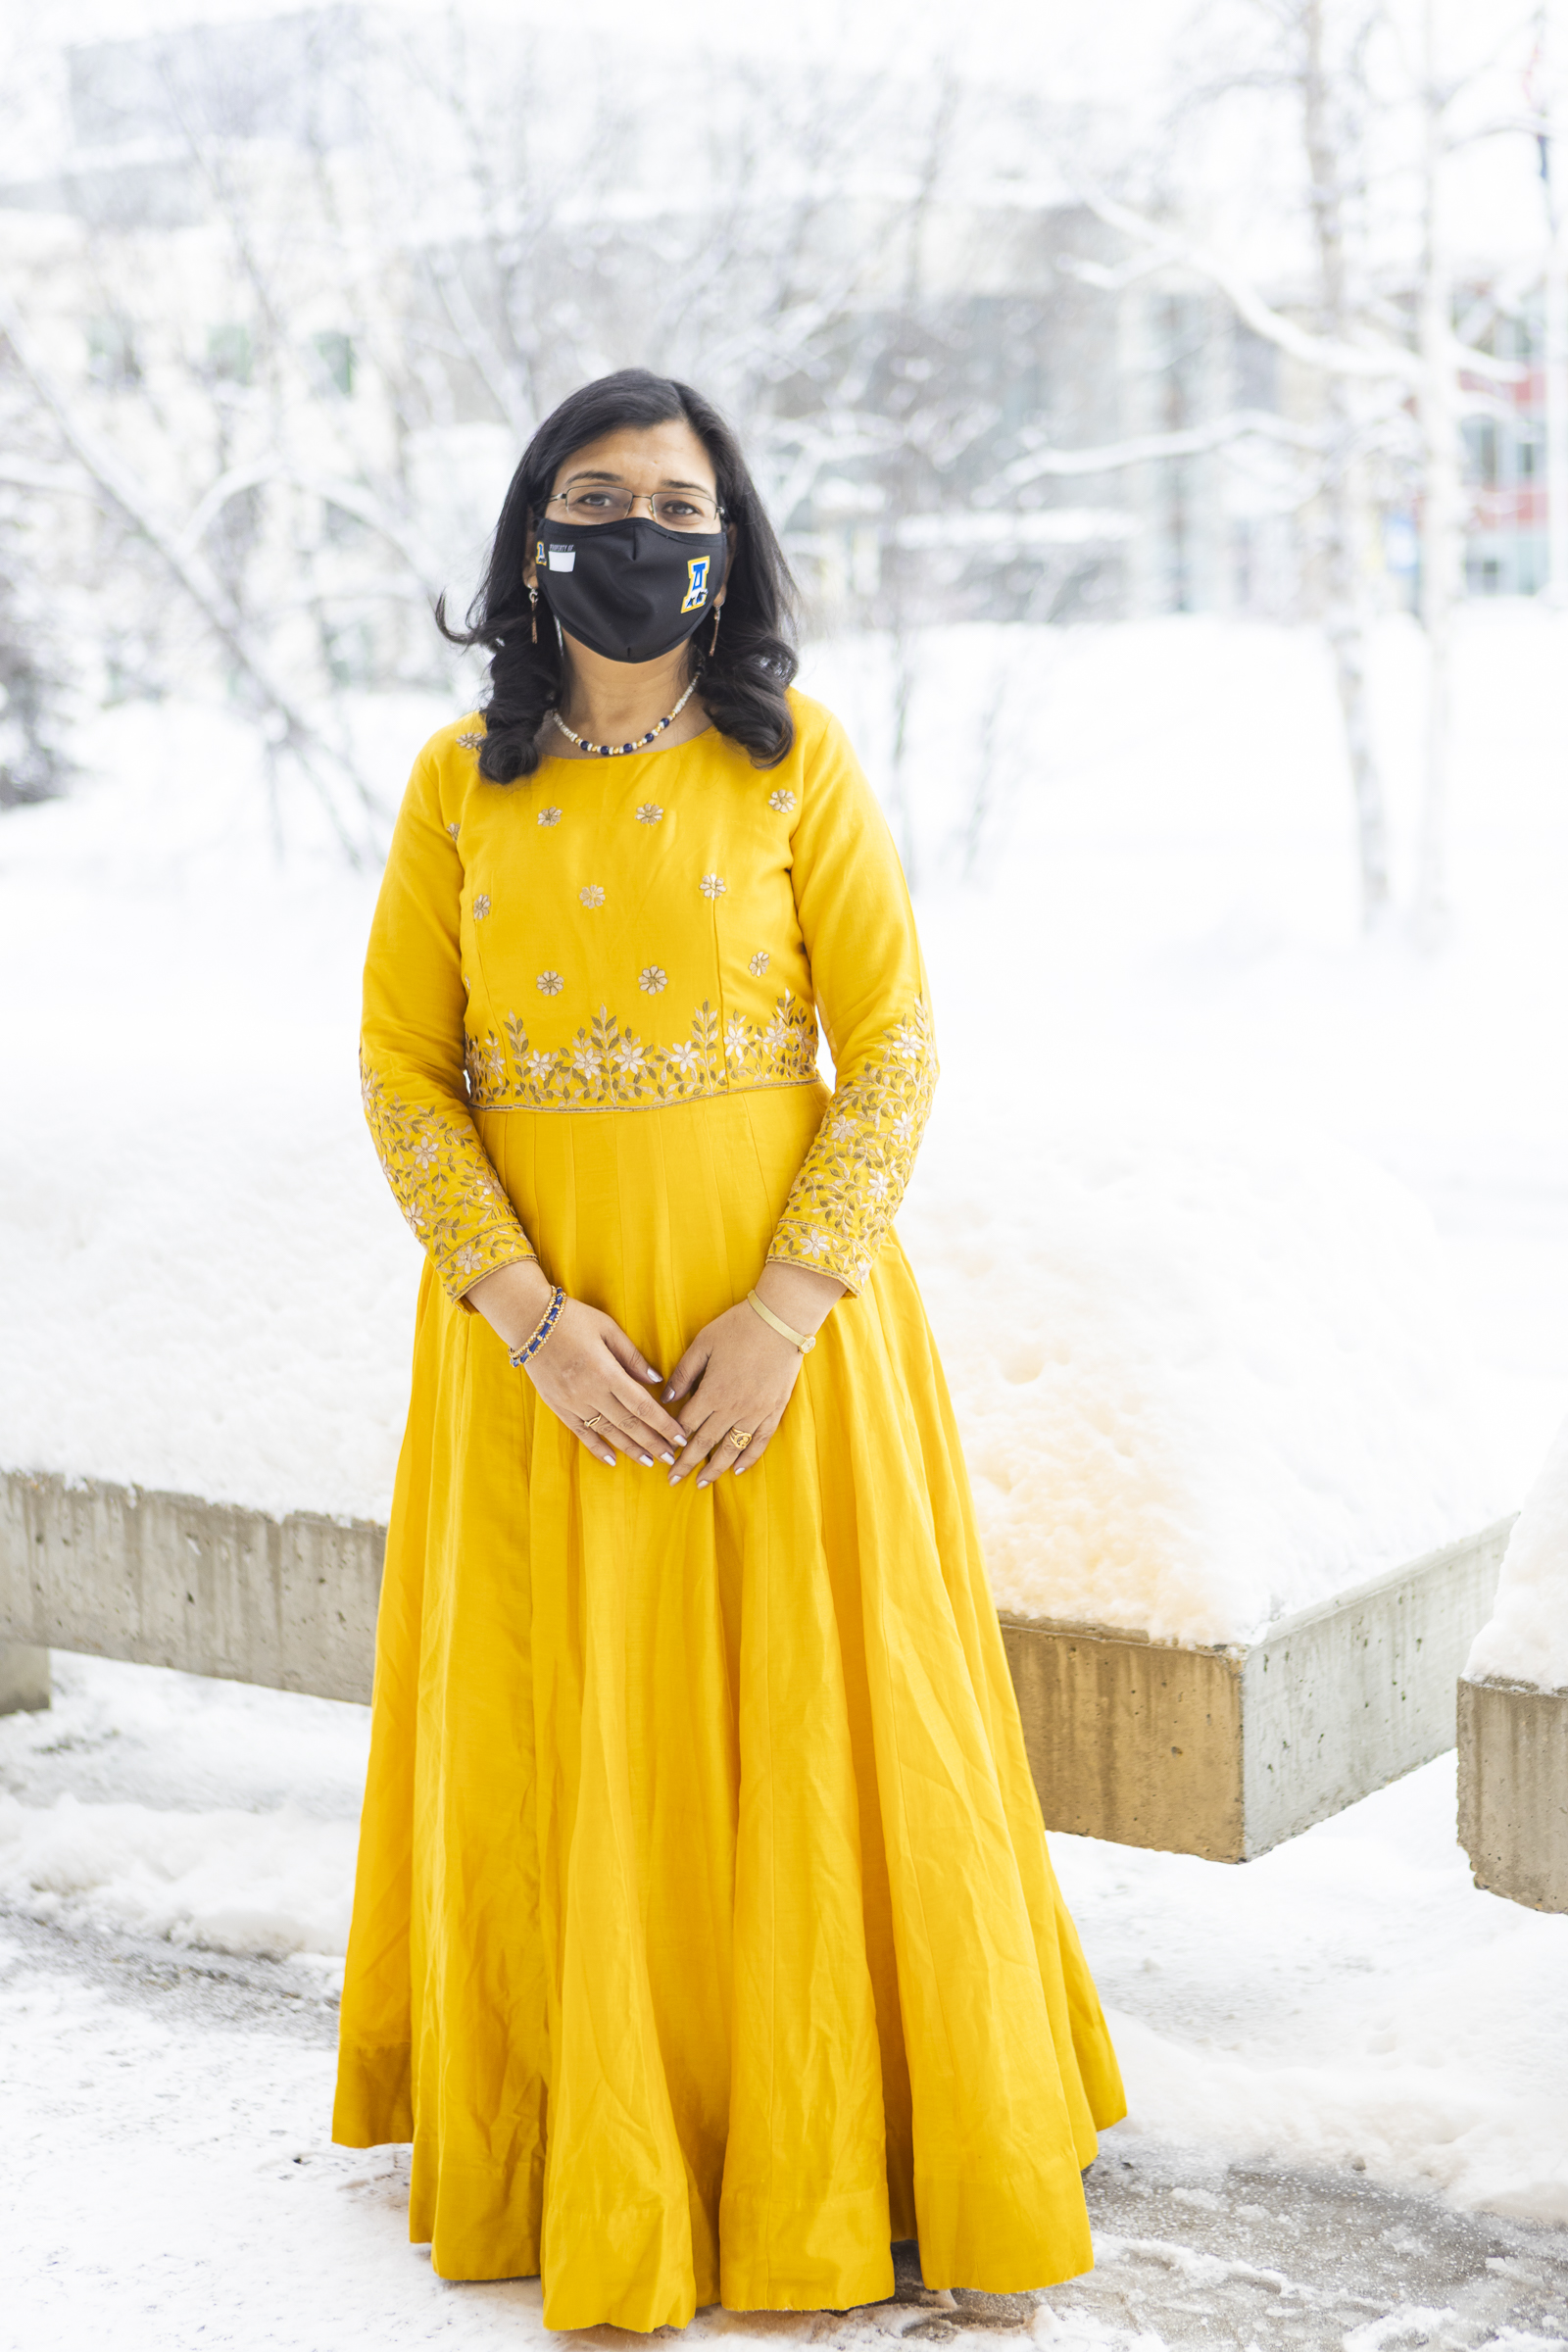 Anupma Prakash wearing a gold dress and mask